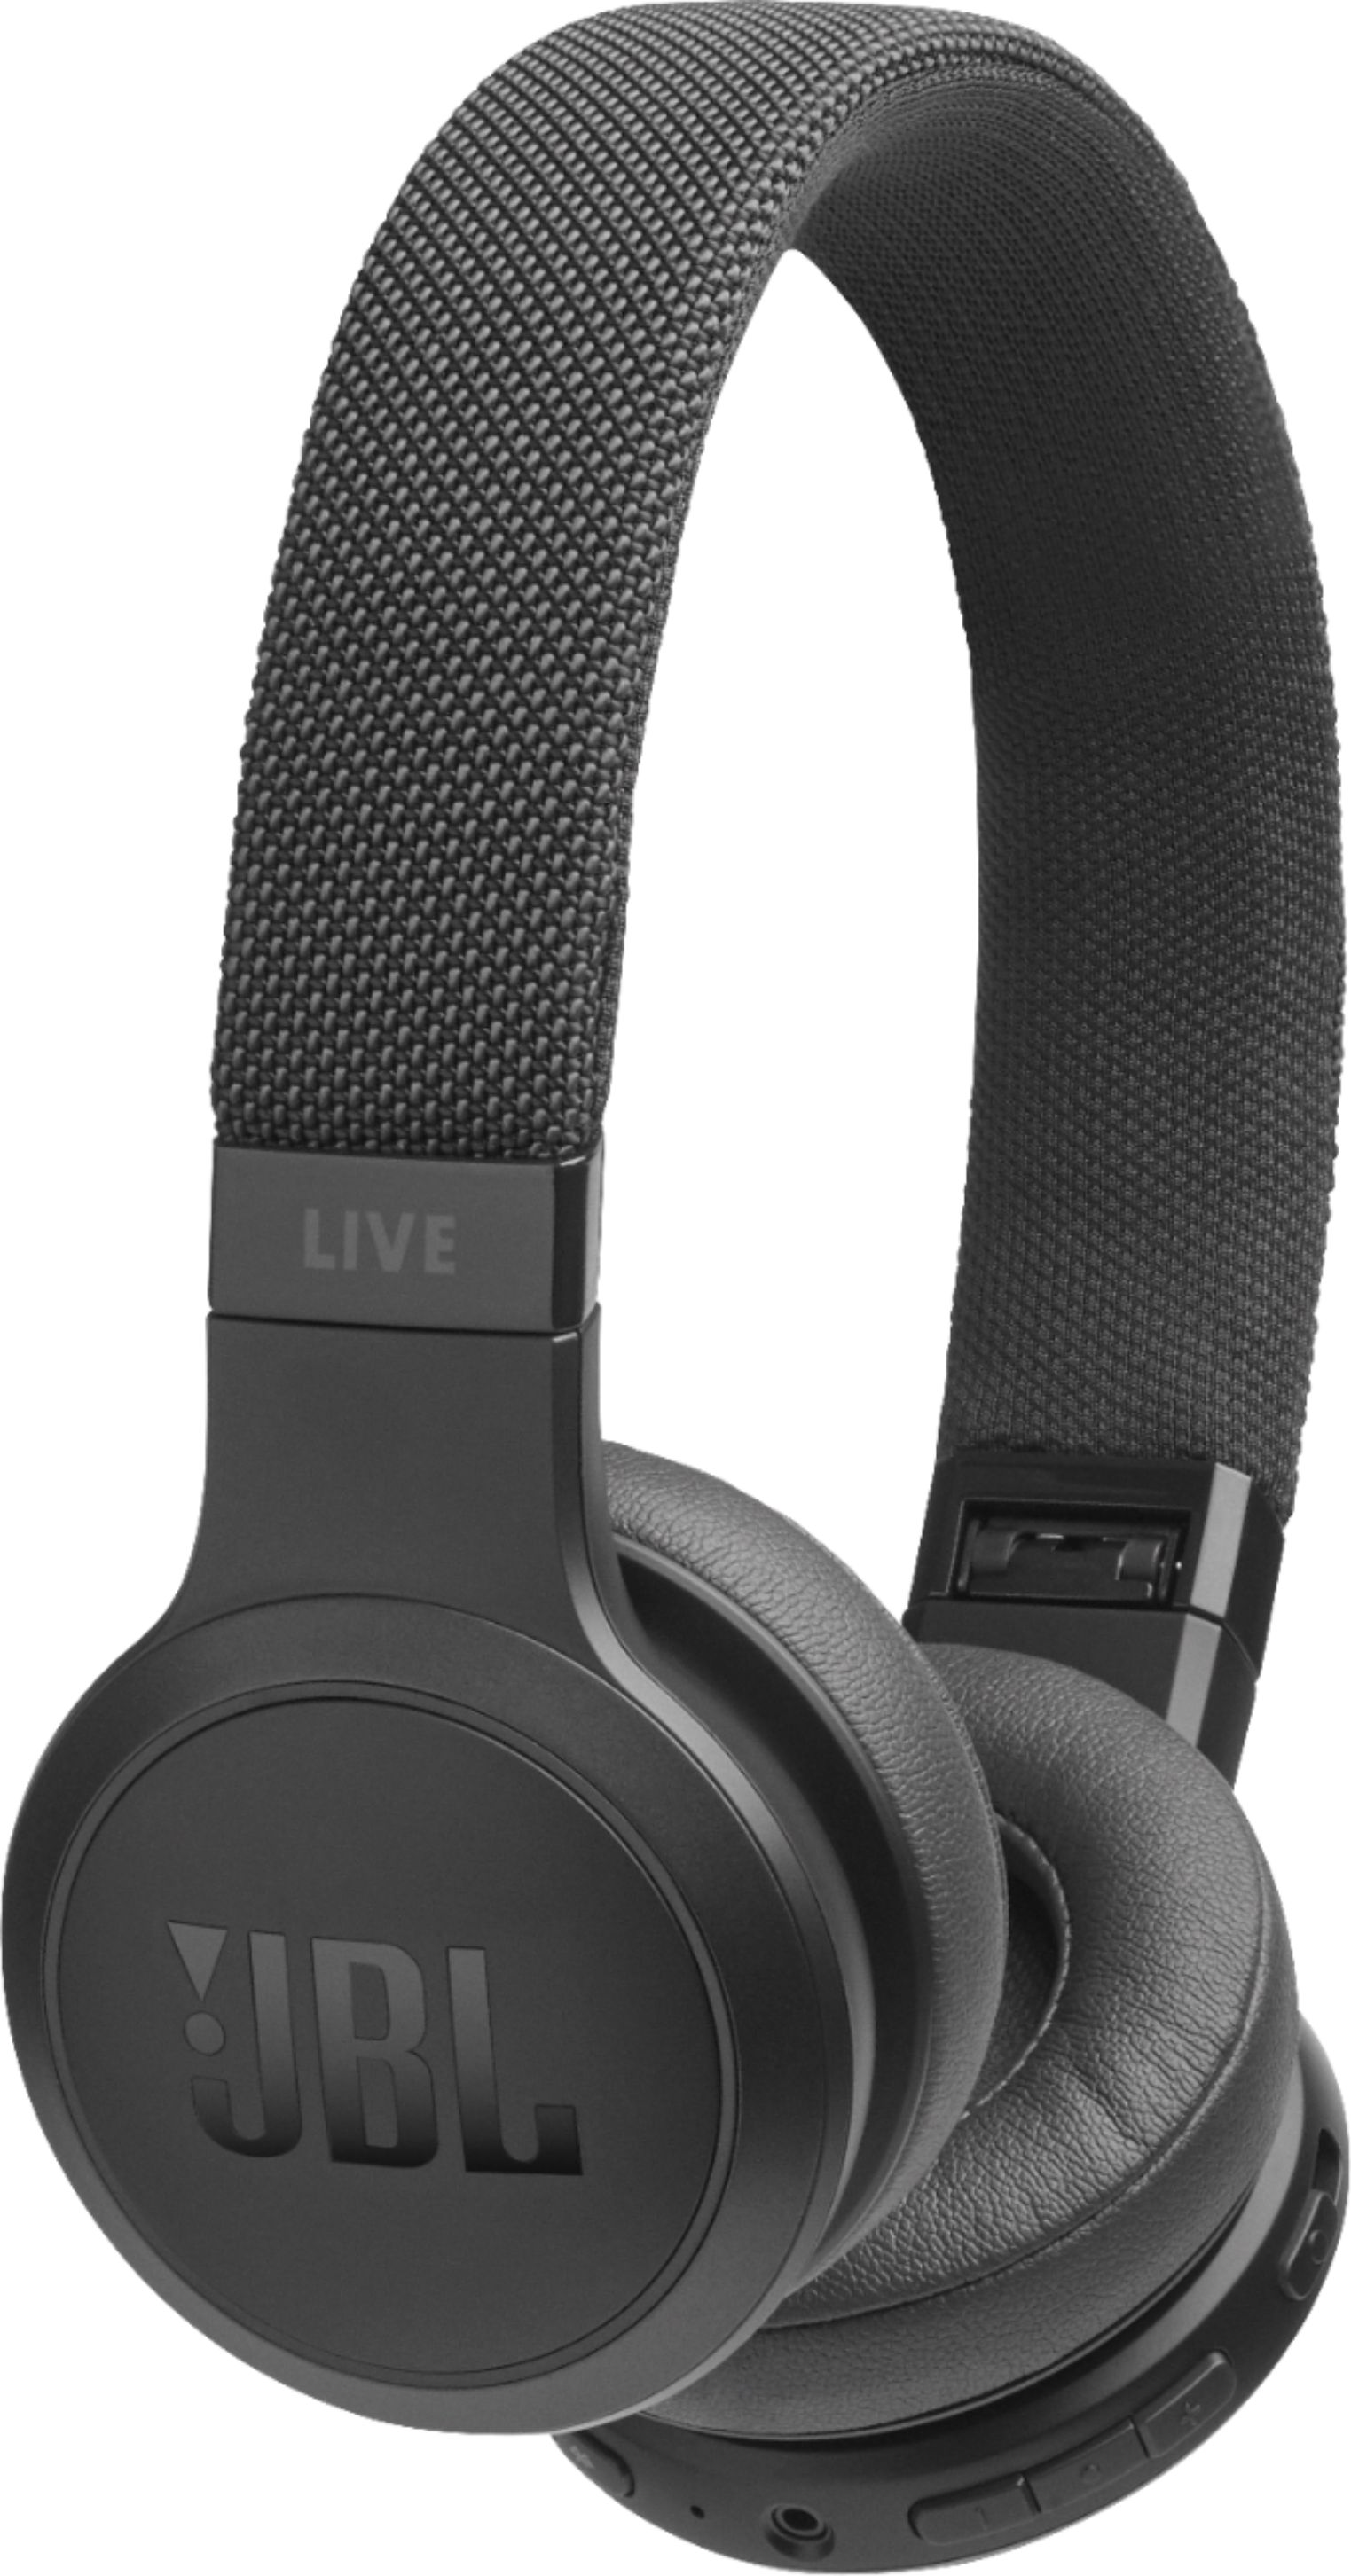 JBL LIVE Wireless On-Ear Headphones Black JBLLIVE400BTBLKAM Best Buy